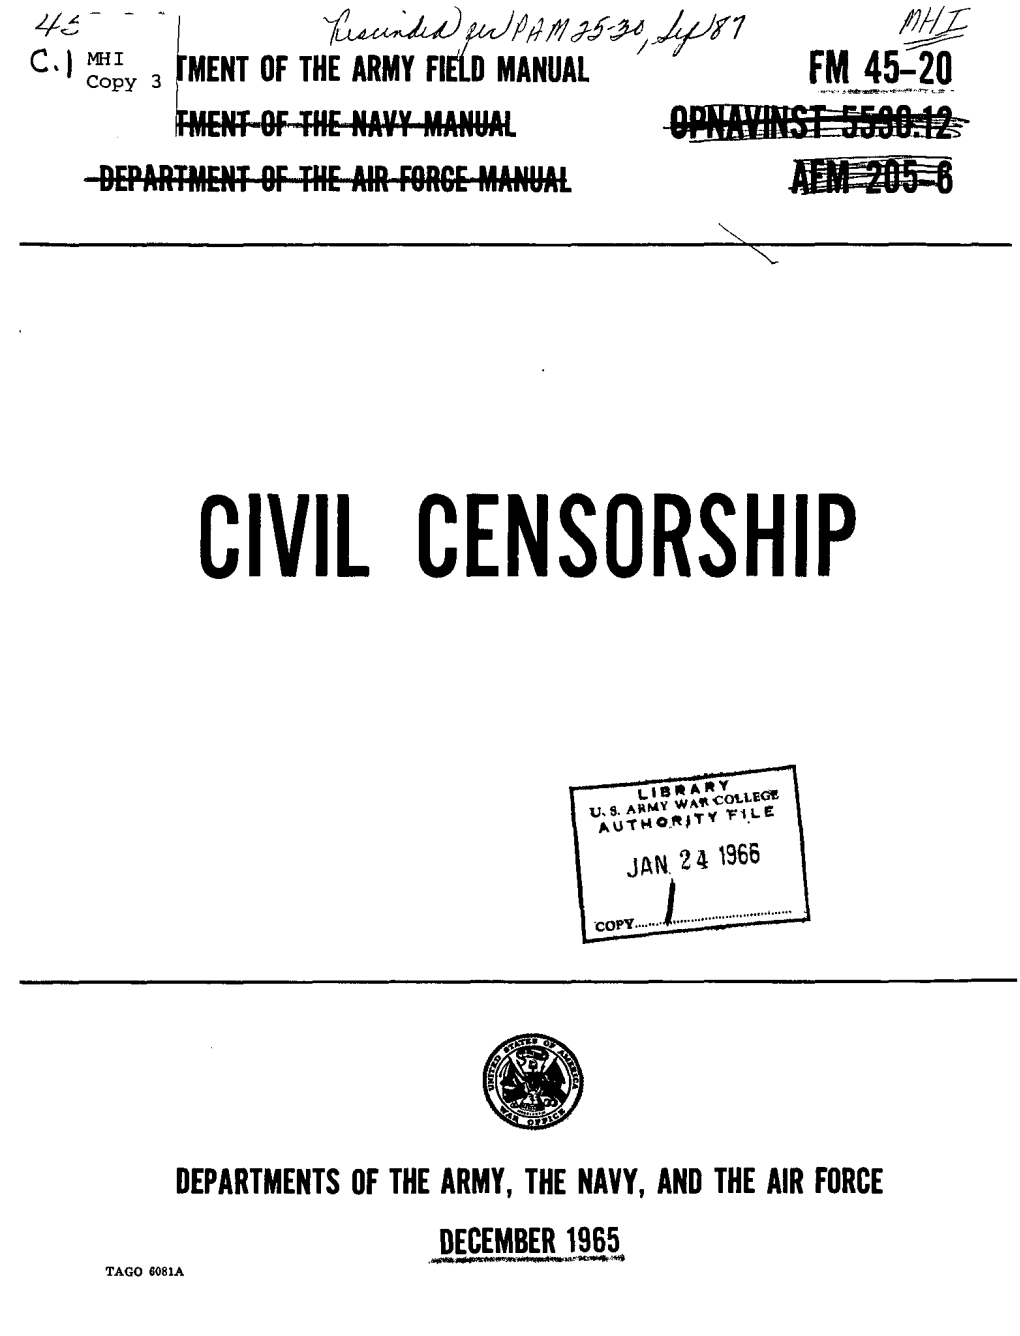 Civil Censorship